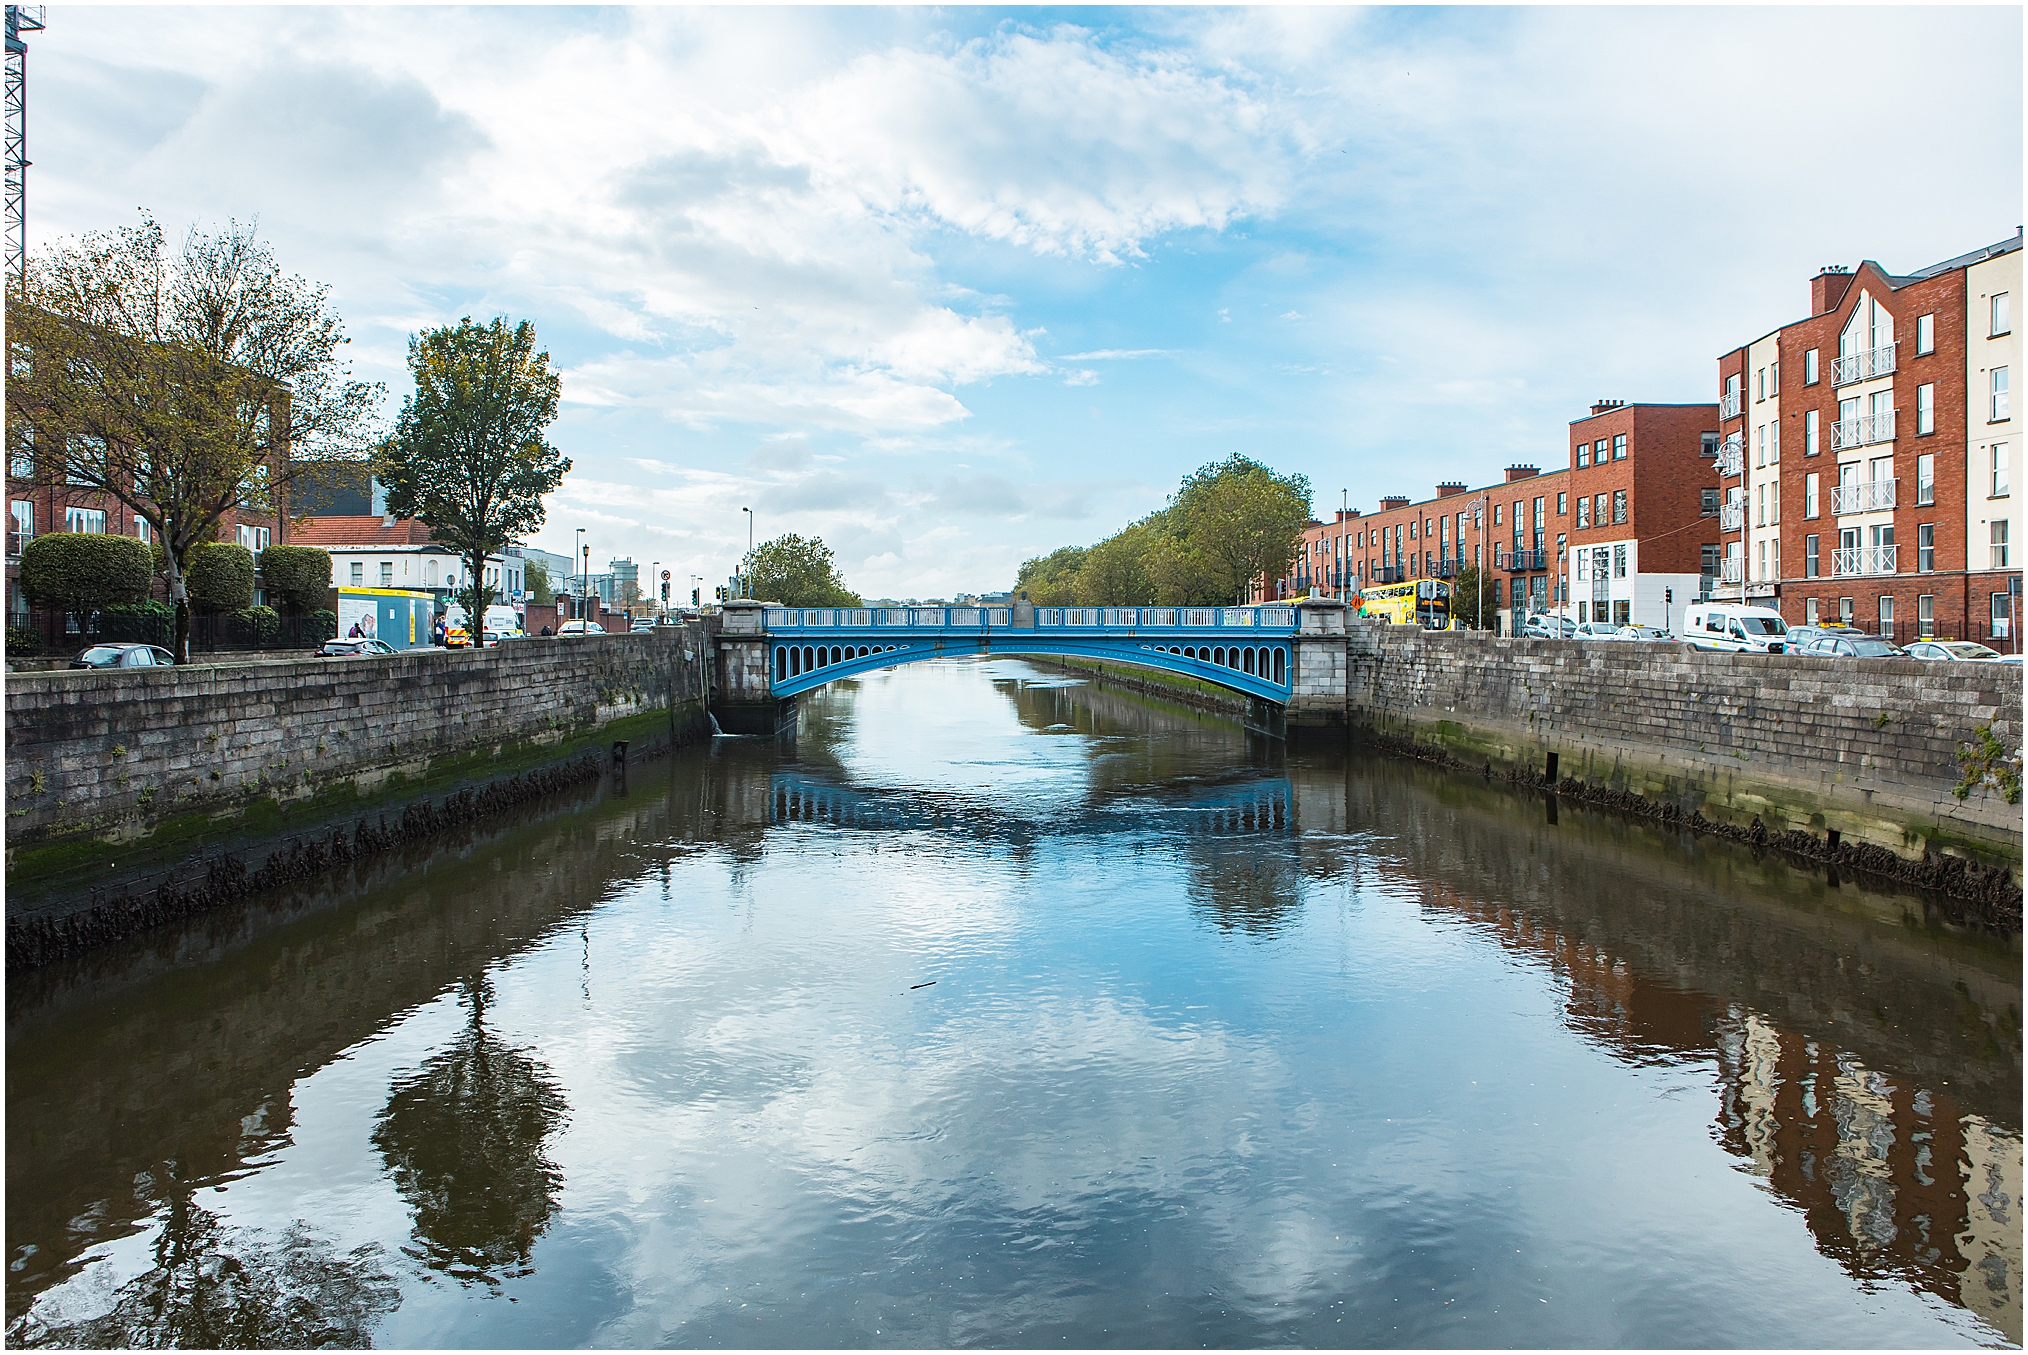 Dublin, Ireland. City views of bridges and River Liffey